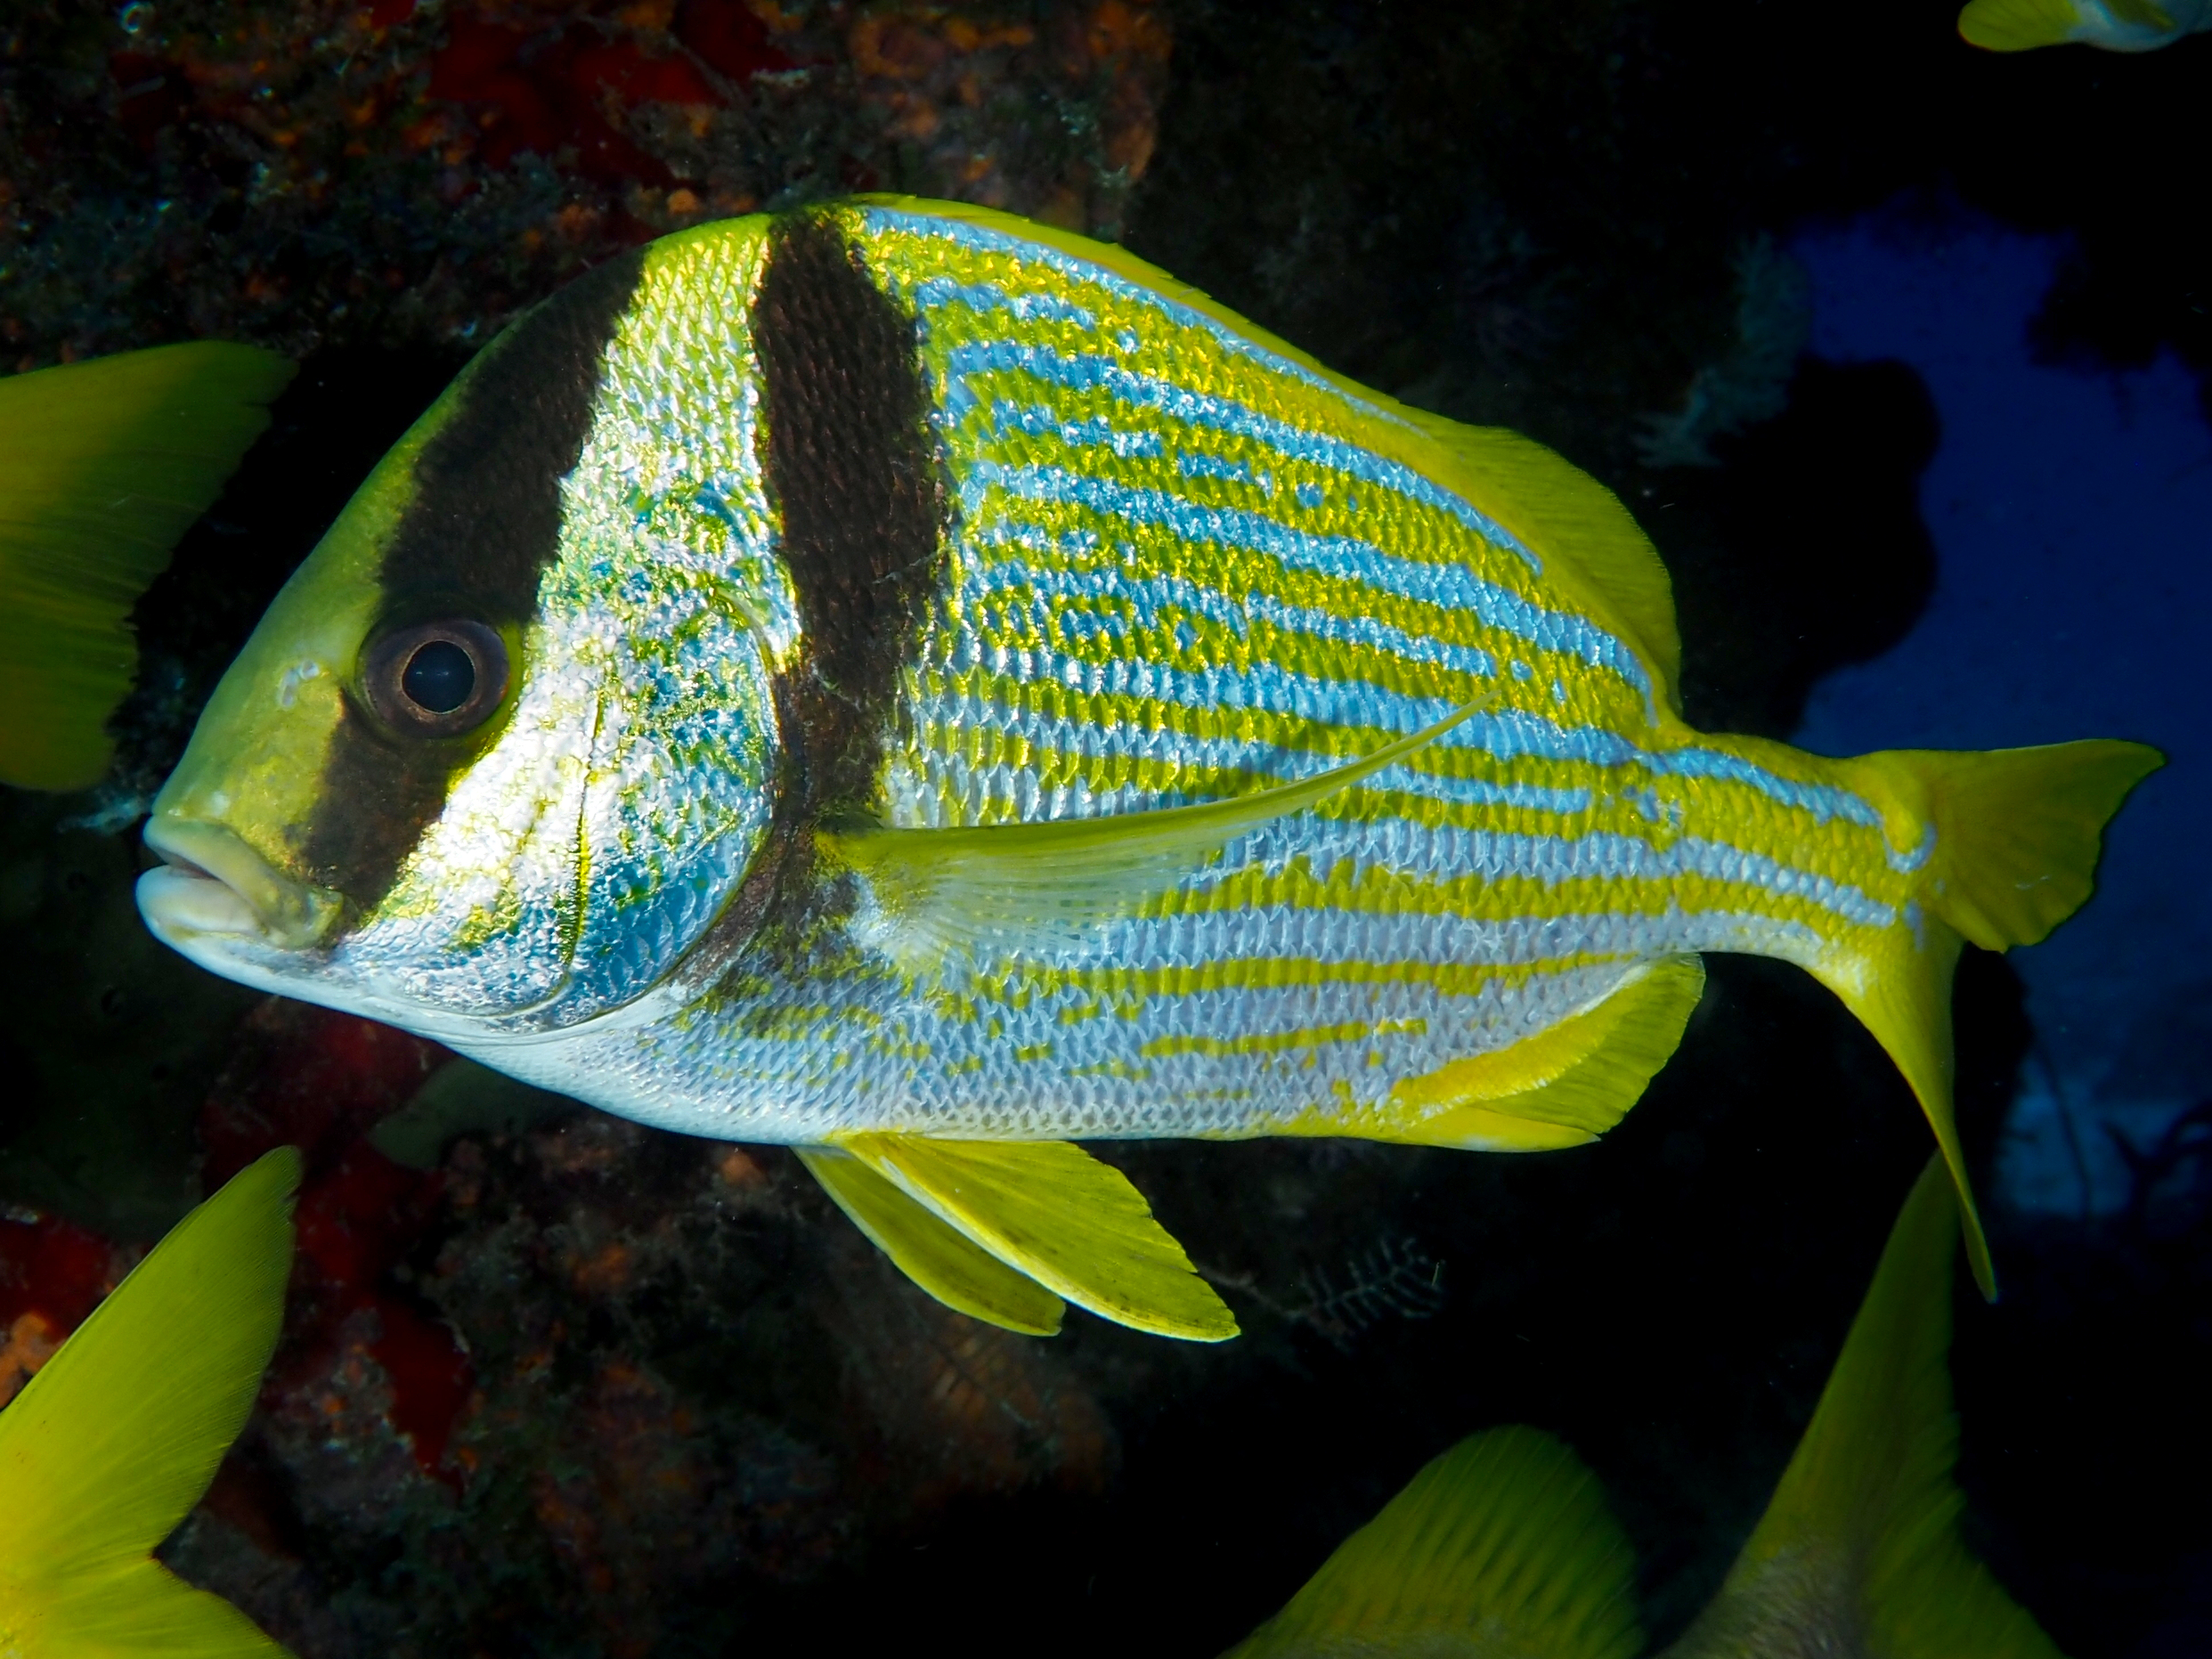 Porkfish - Anisotremus virginicus